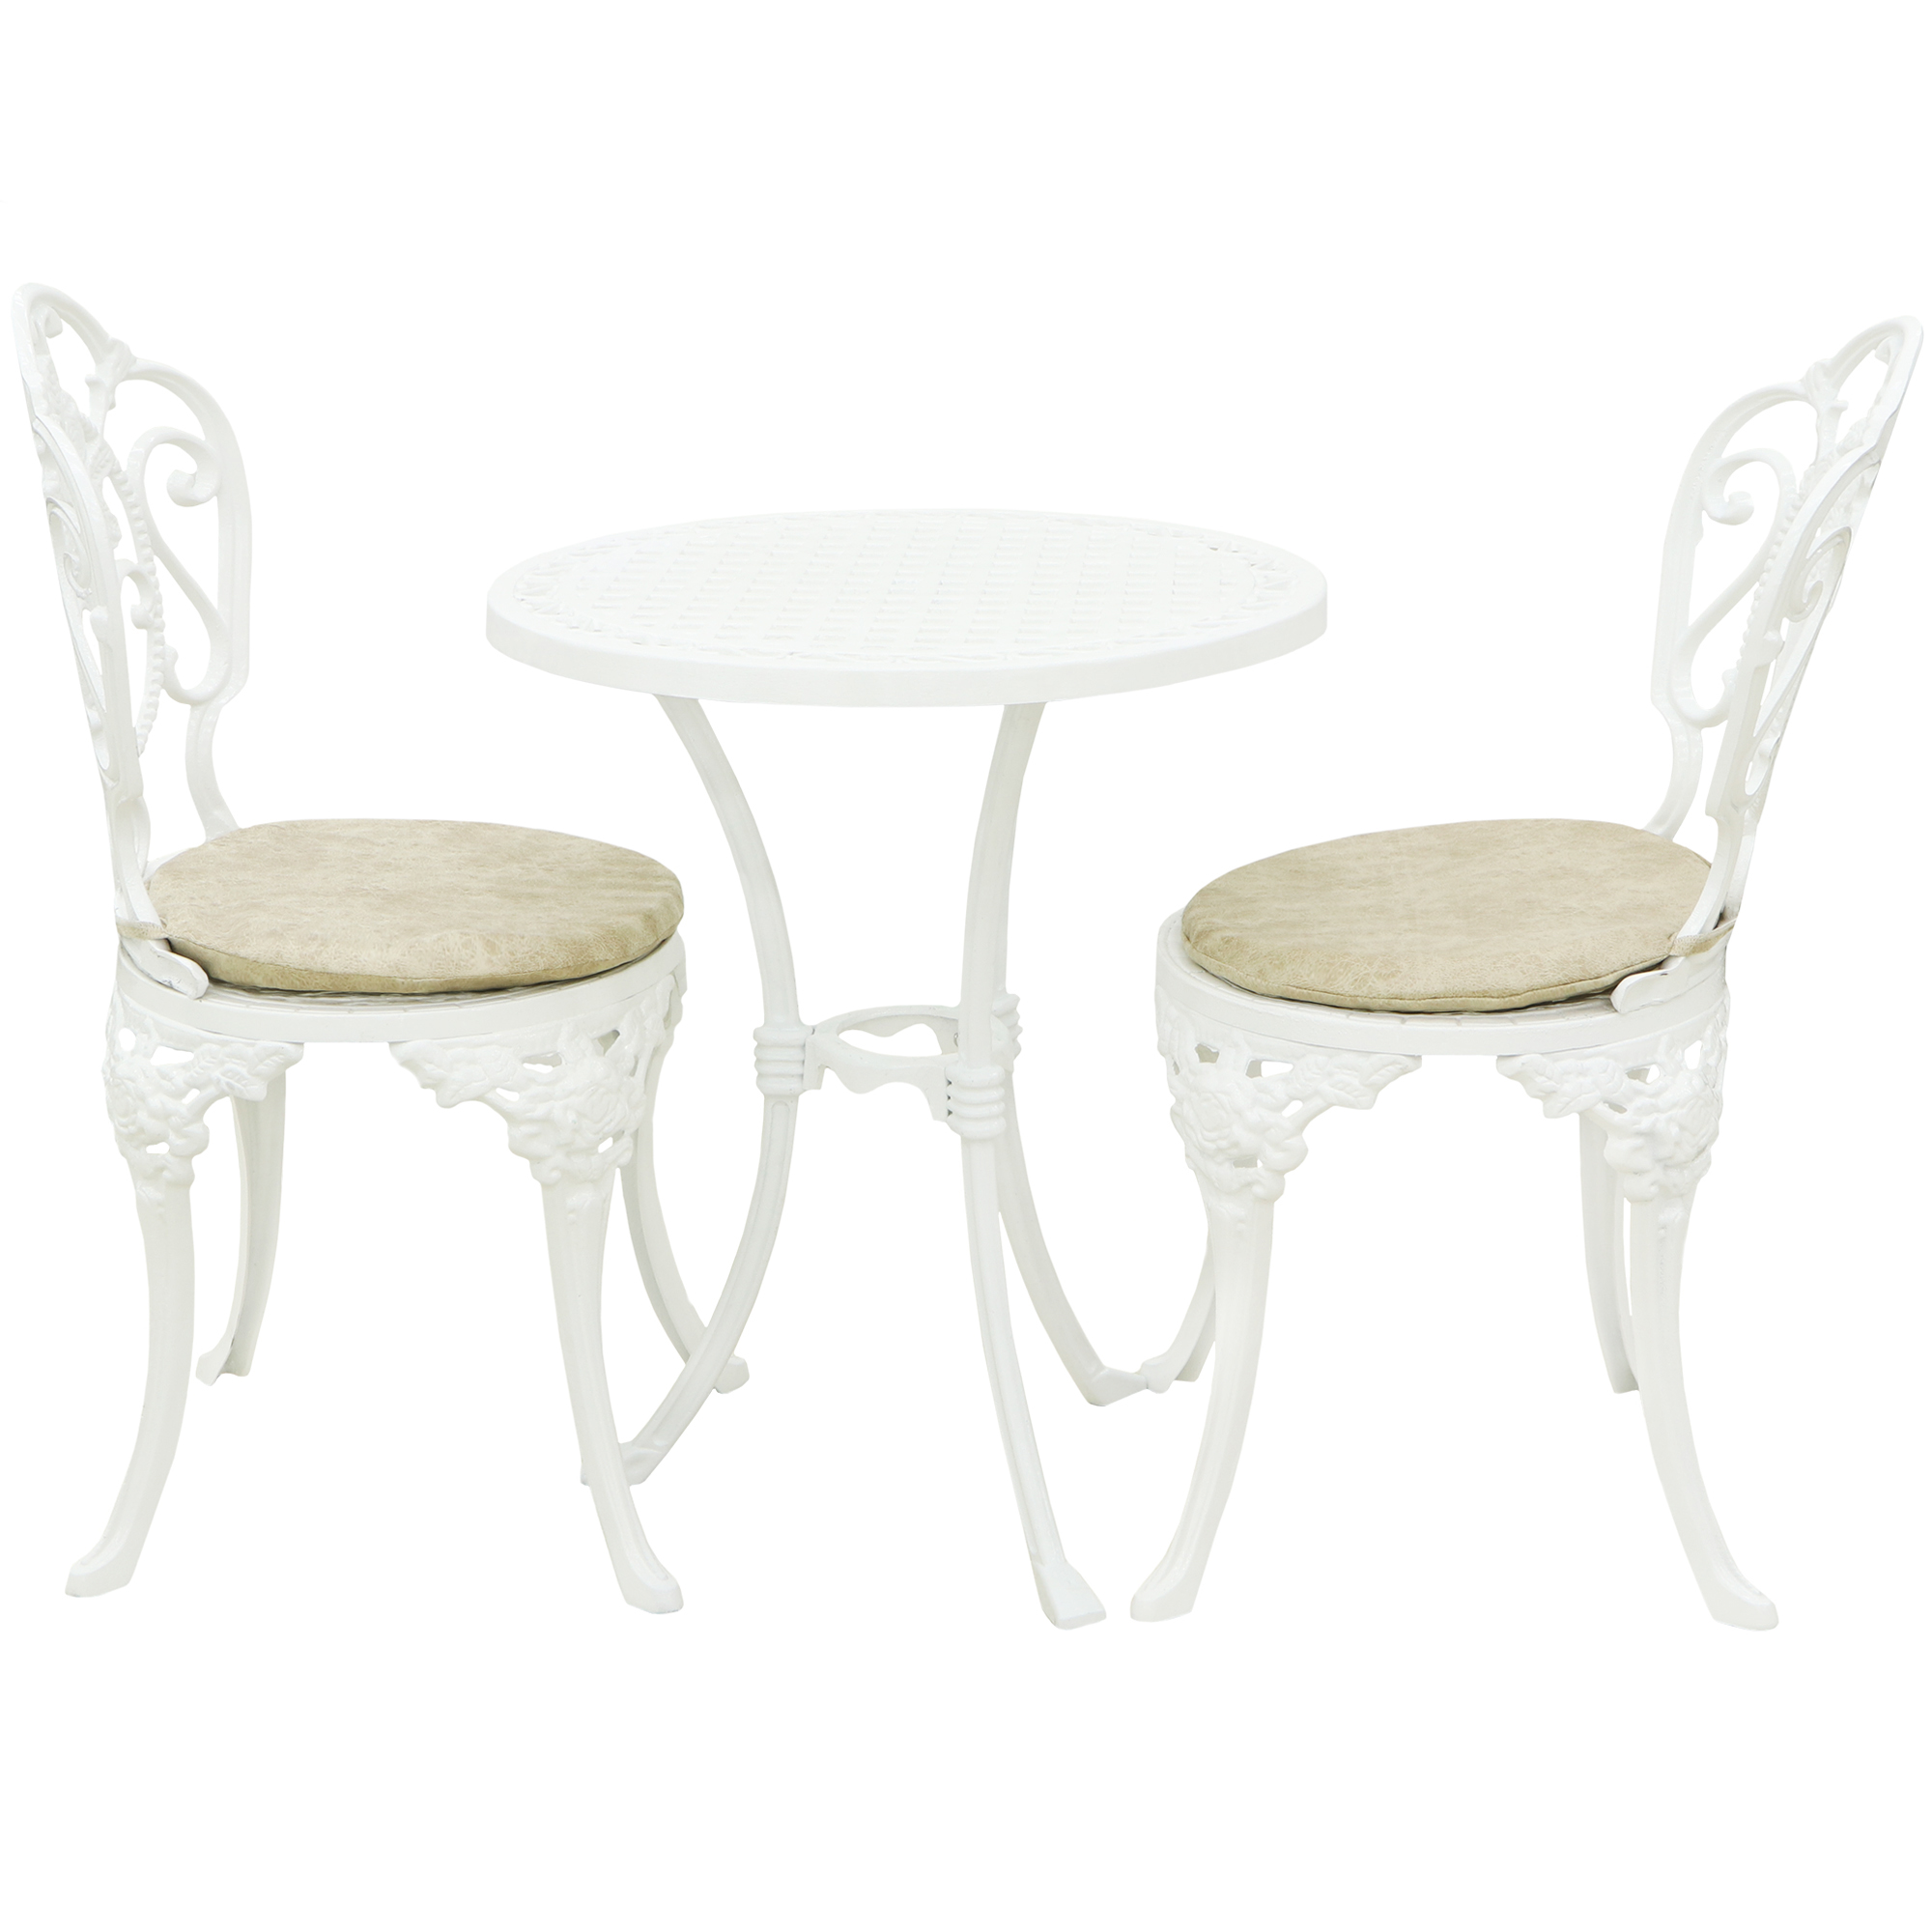 Комплект мебели  Lofa bistro 3 предмета, цвет белый, размер 52х40х89 см - фото 1